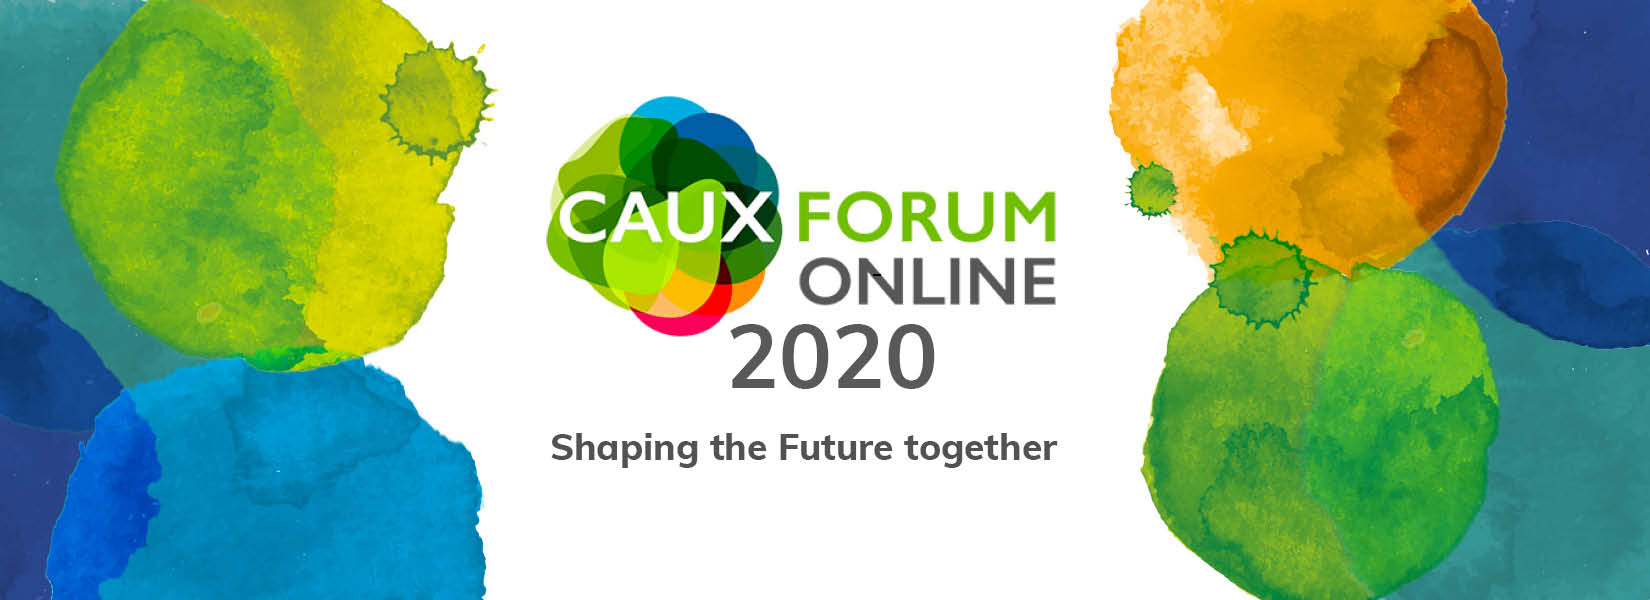 Caux Forum Online neutral 2020 EN with year final